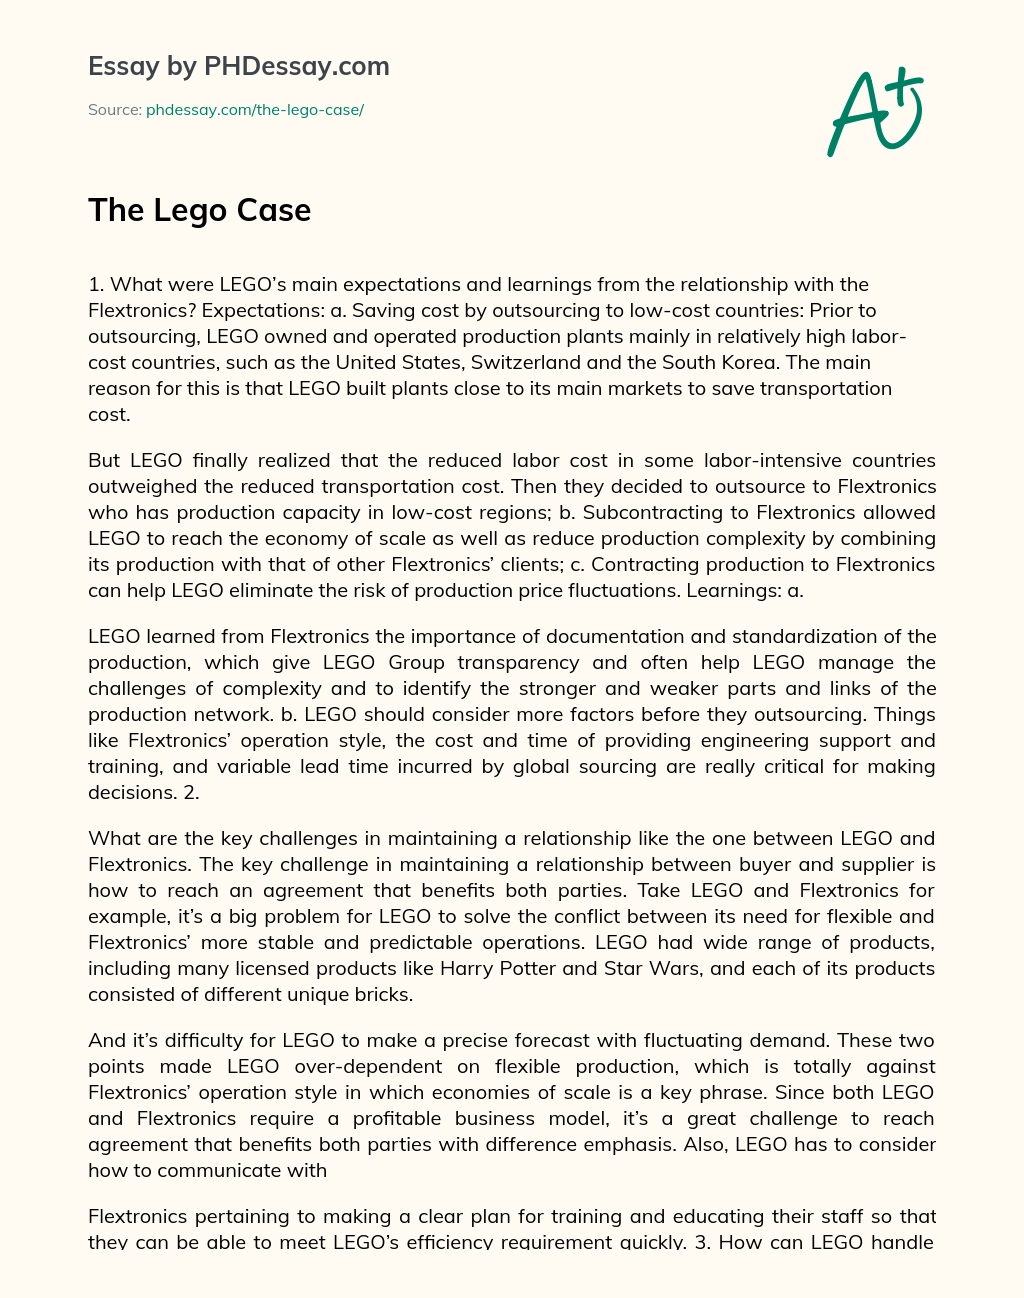 The Lego Case essay